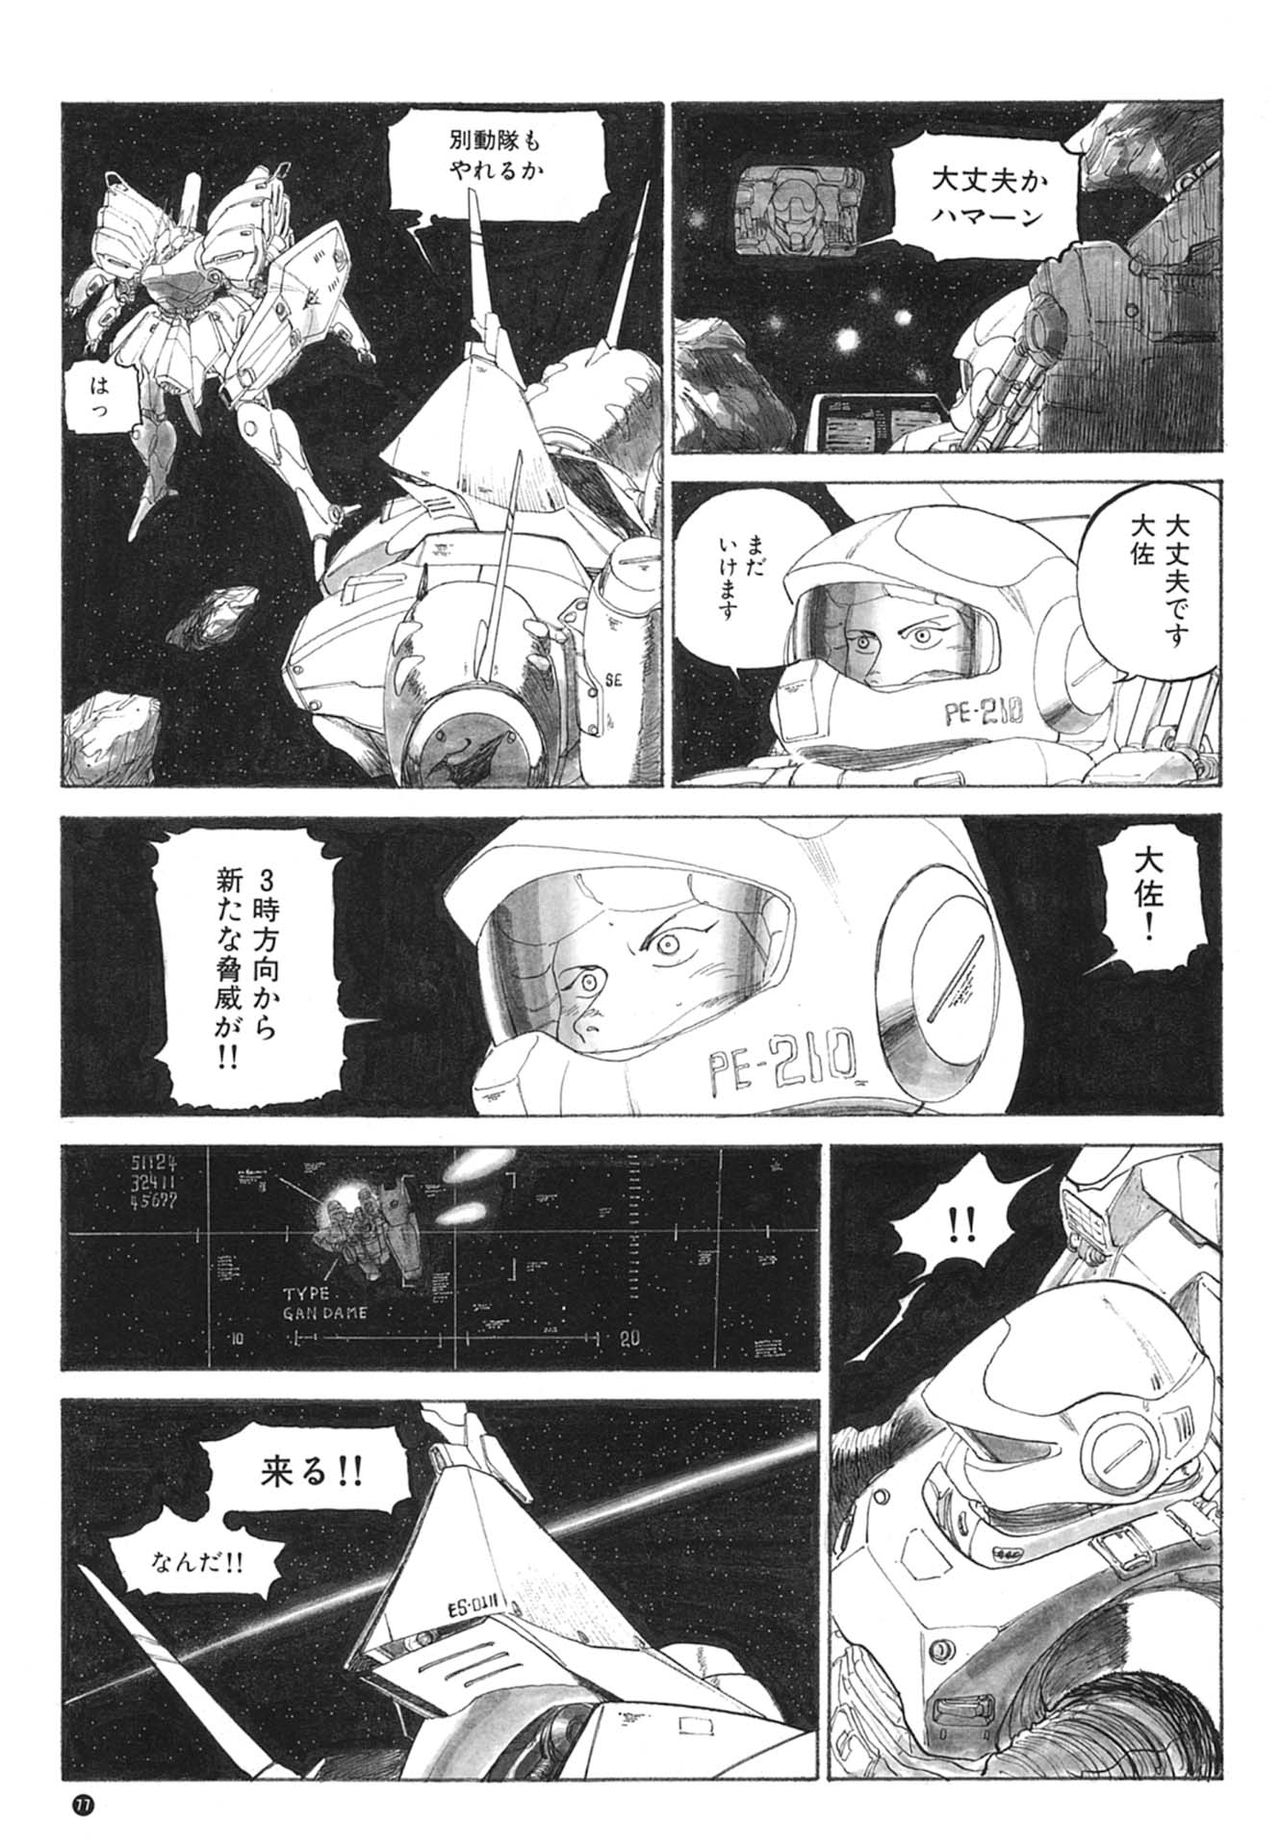 [Kazuhisa Kondo] Kazuhisa Kondo 2D & 3D Works - Go Ahead - From Mobile Suit Gundam to Original Mechanism 76